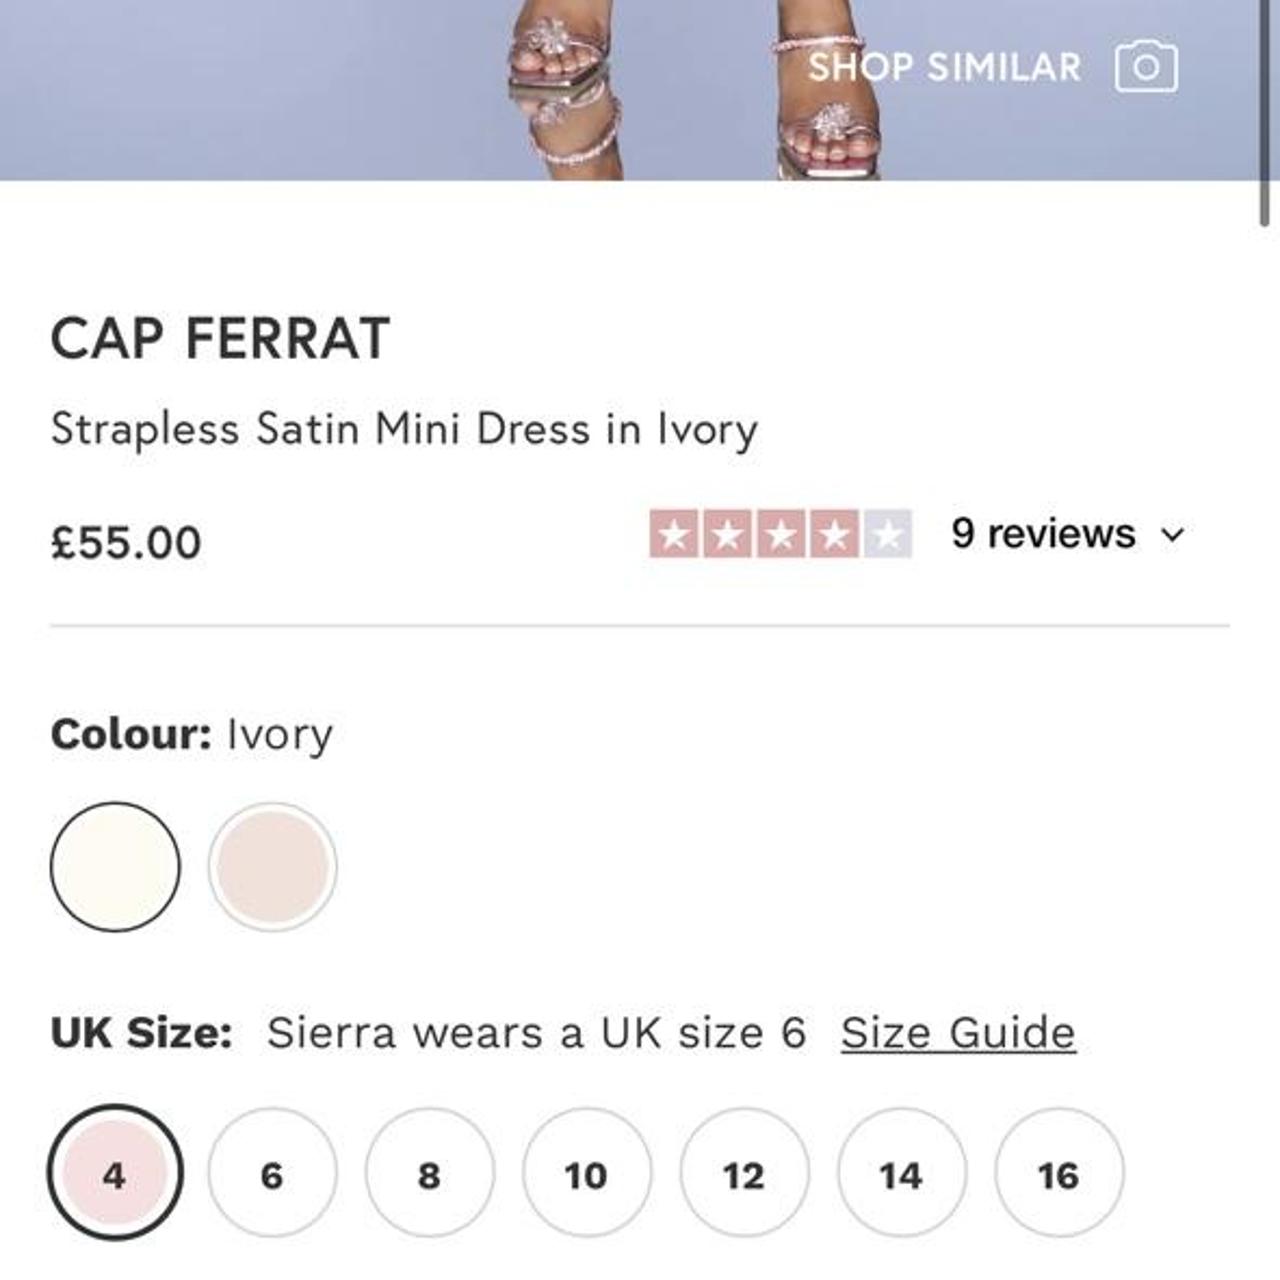 Cap Ferrat Strapless Satin Mini Dress in Ivory